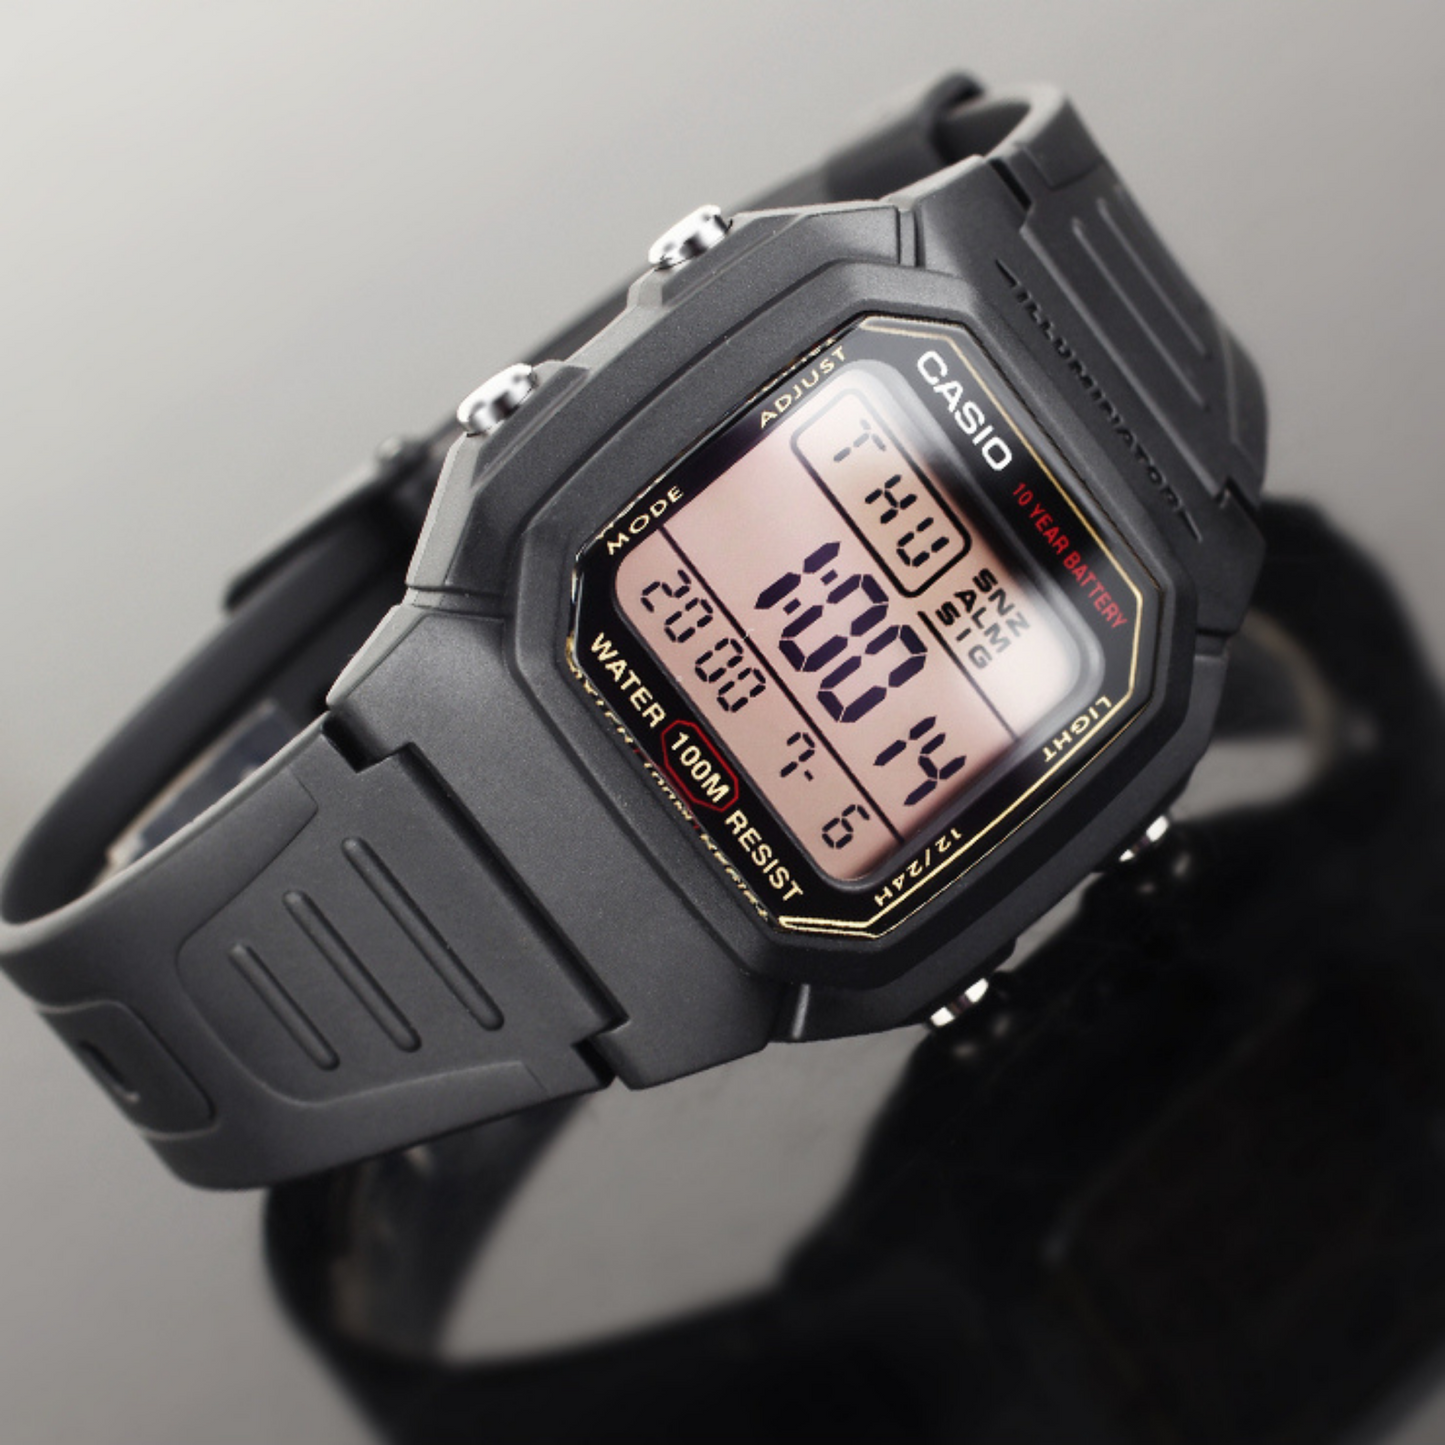 Reloj Casio hombre Modelo W-800HG-9AV